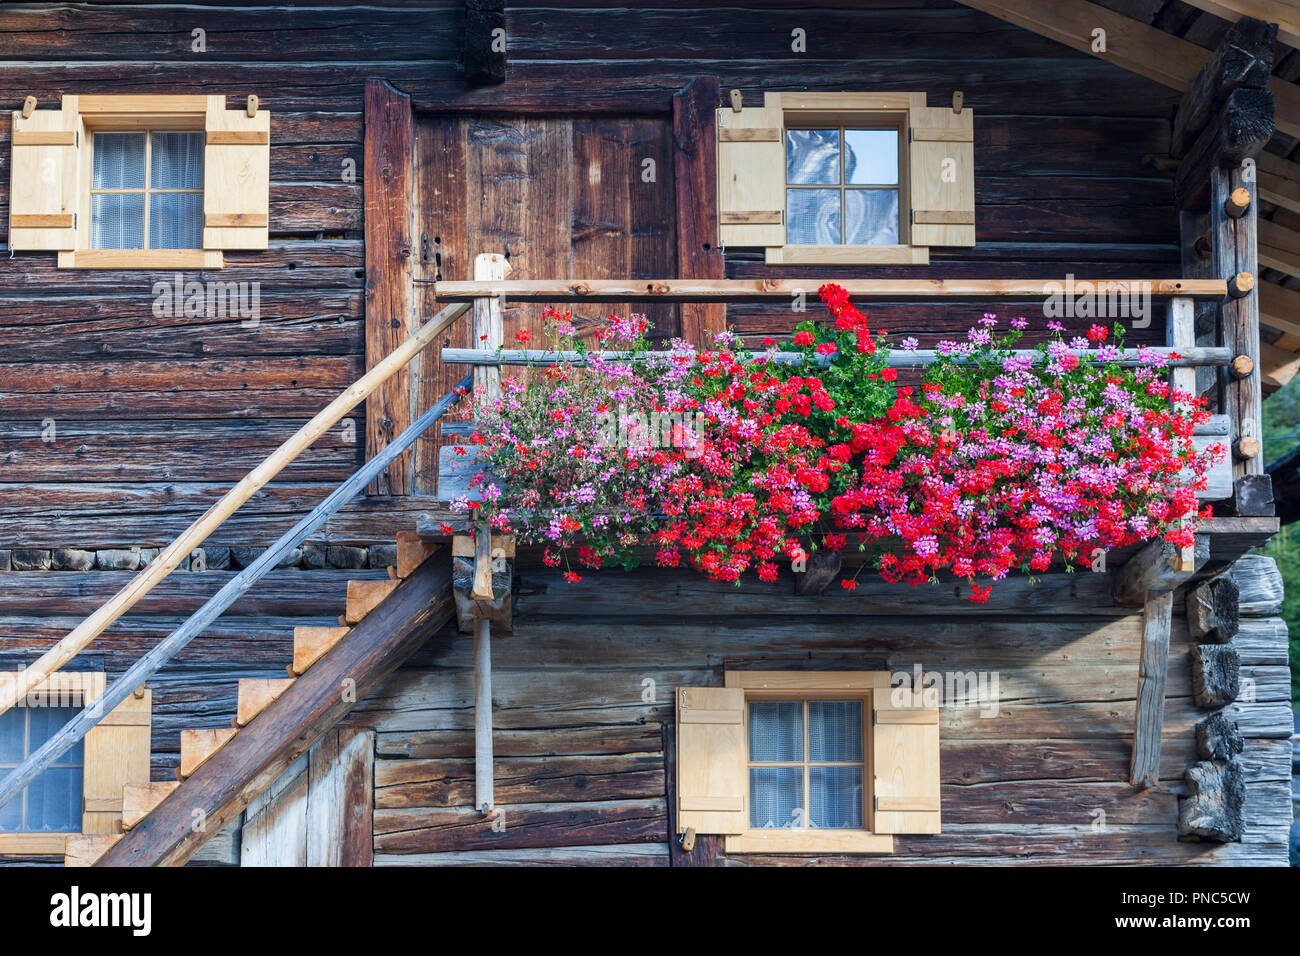 Flowering balcony on an old Alphus Stock Photo